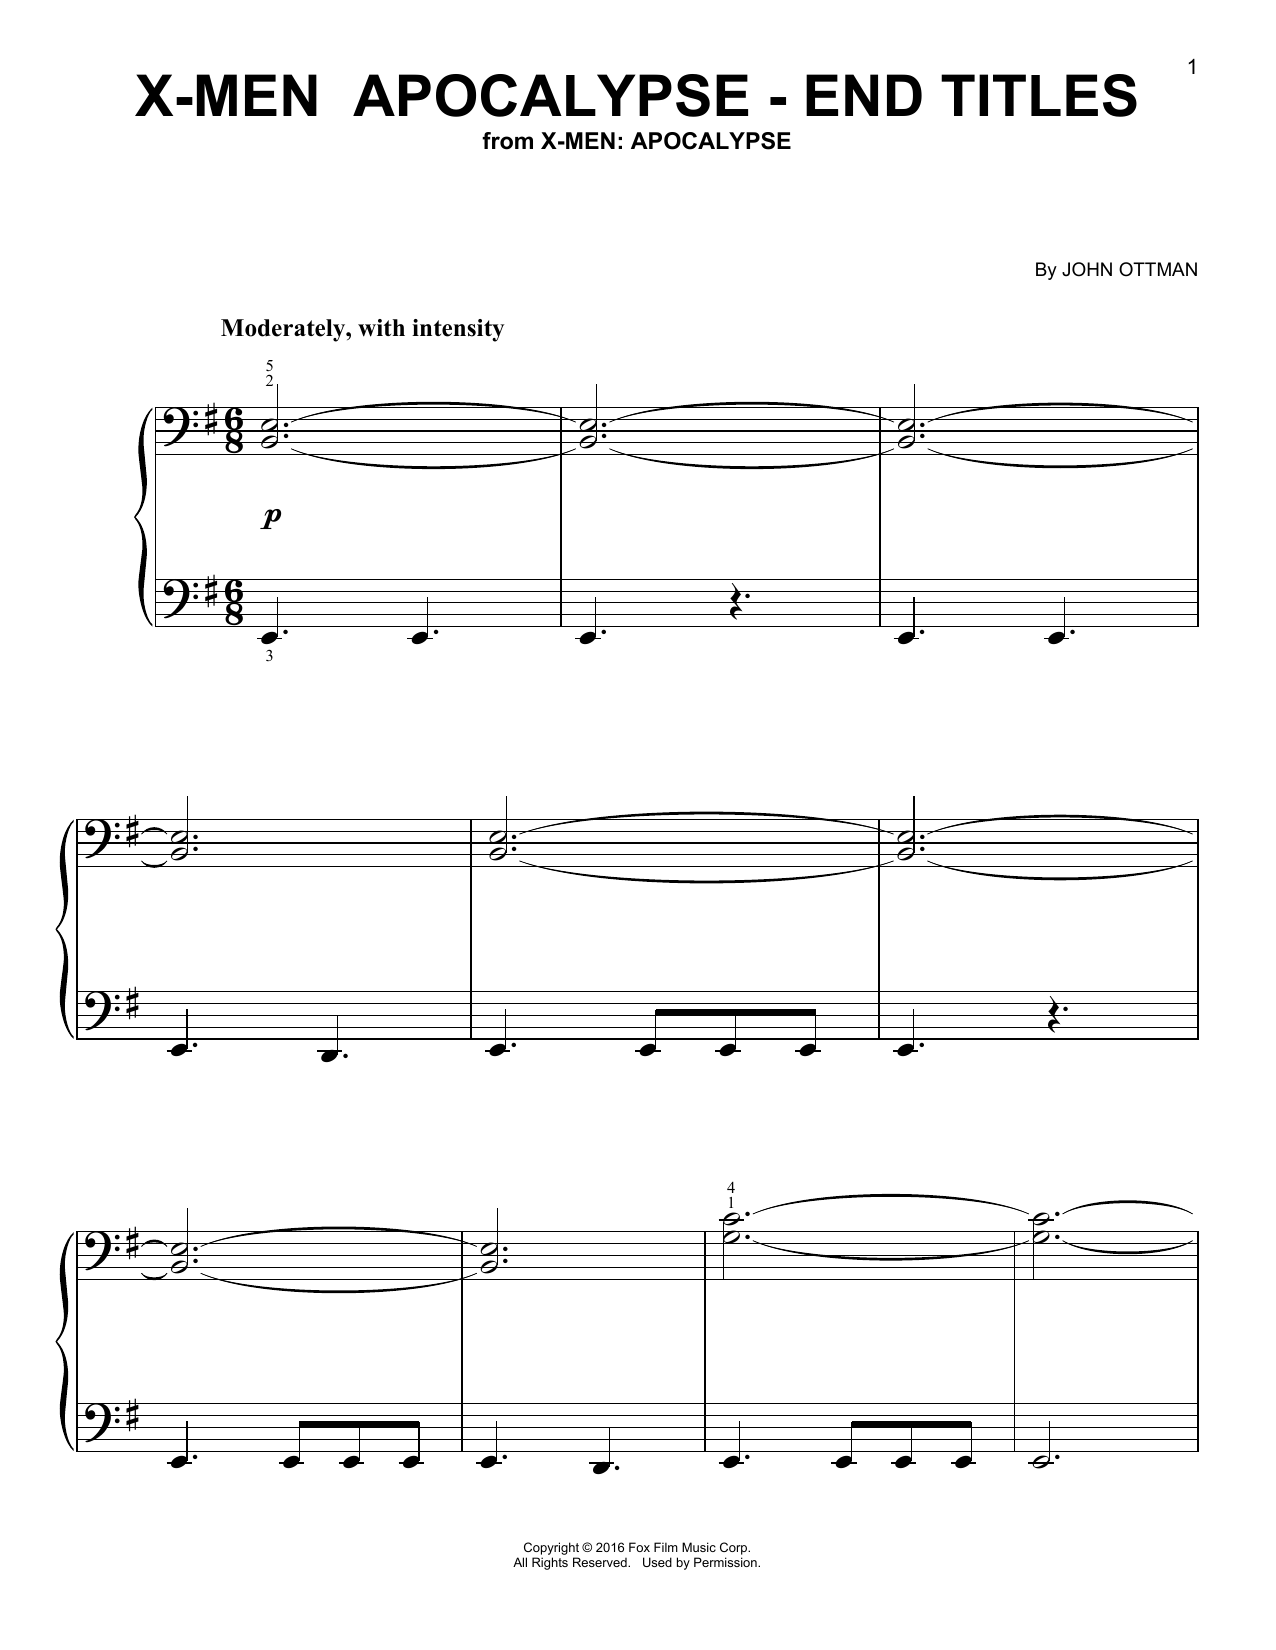 John Ottman X-Men: Apocalypse - End Titles Sheet Music Notes & Chords for Easy Piano - Download or Print PDF